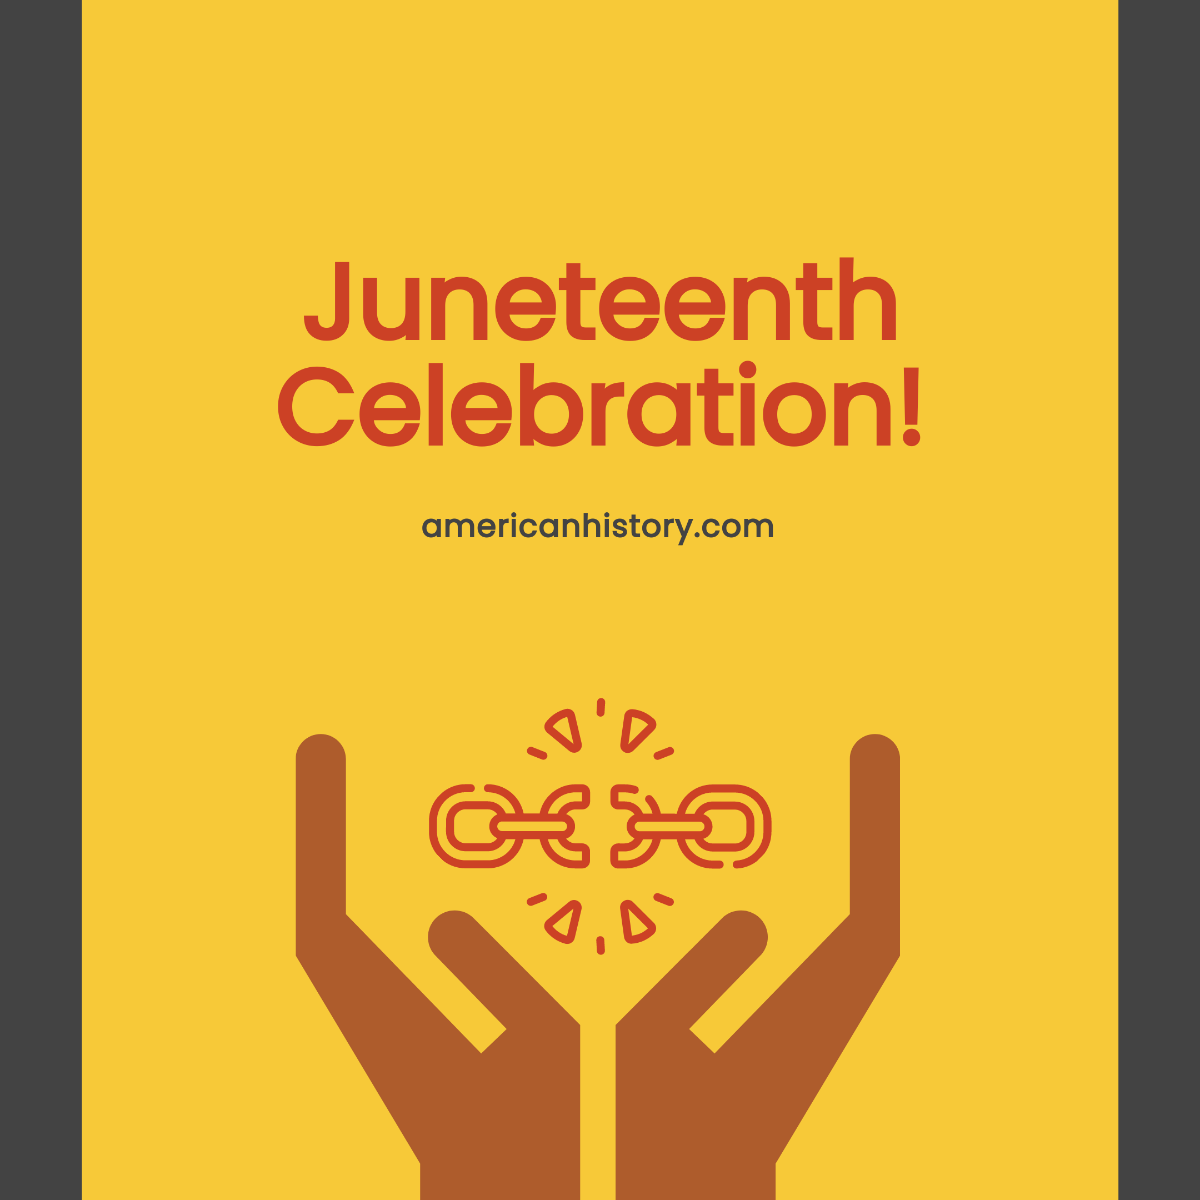 Free Juneteenth Celebration Instagram Post Template